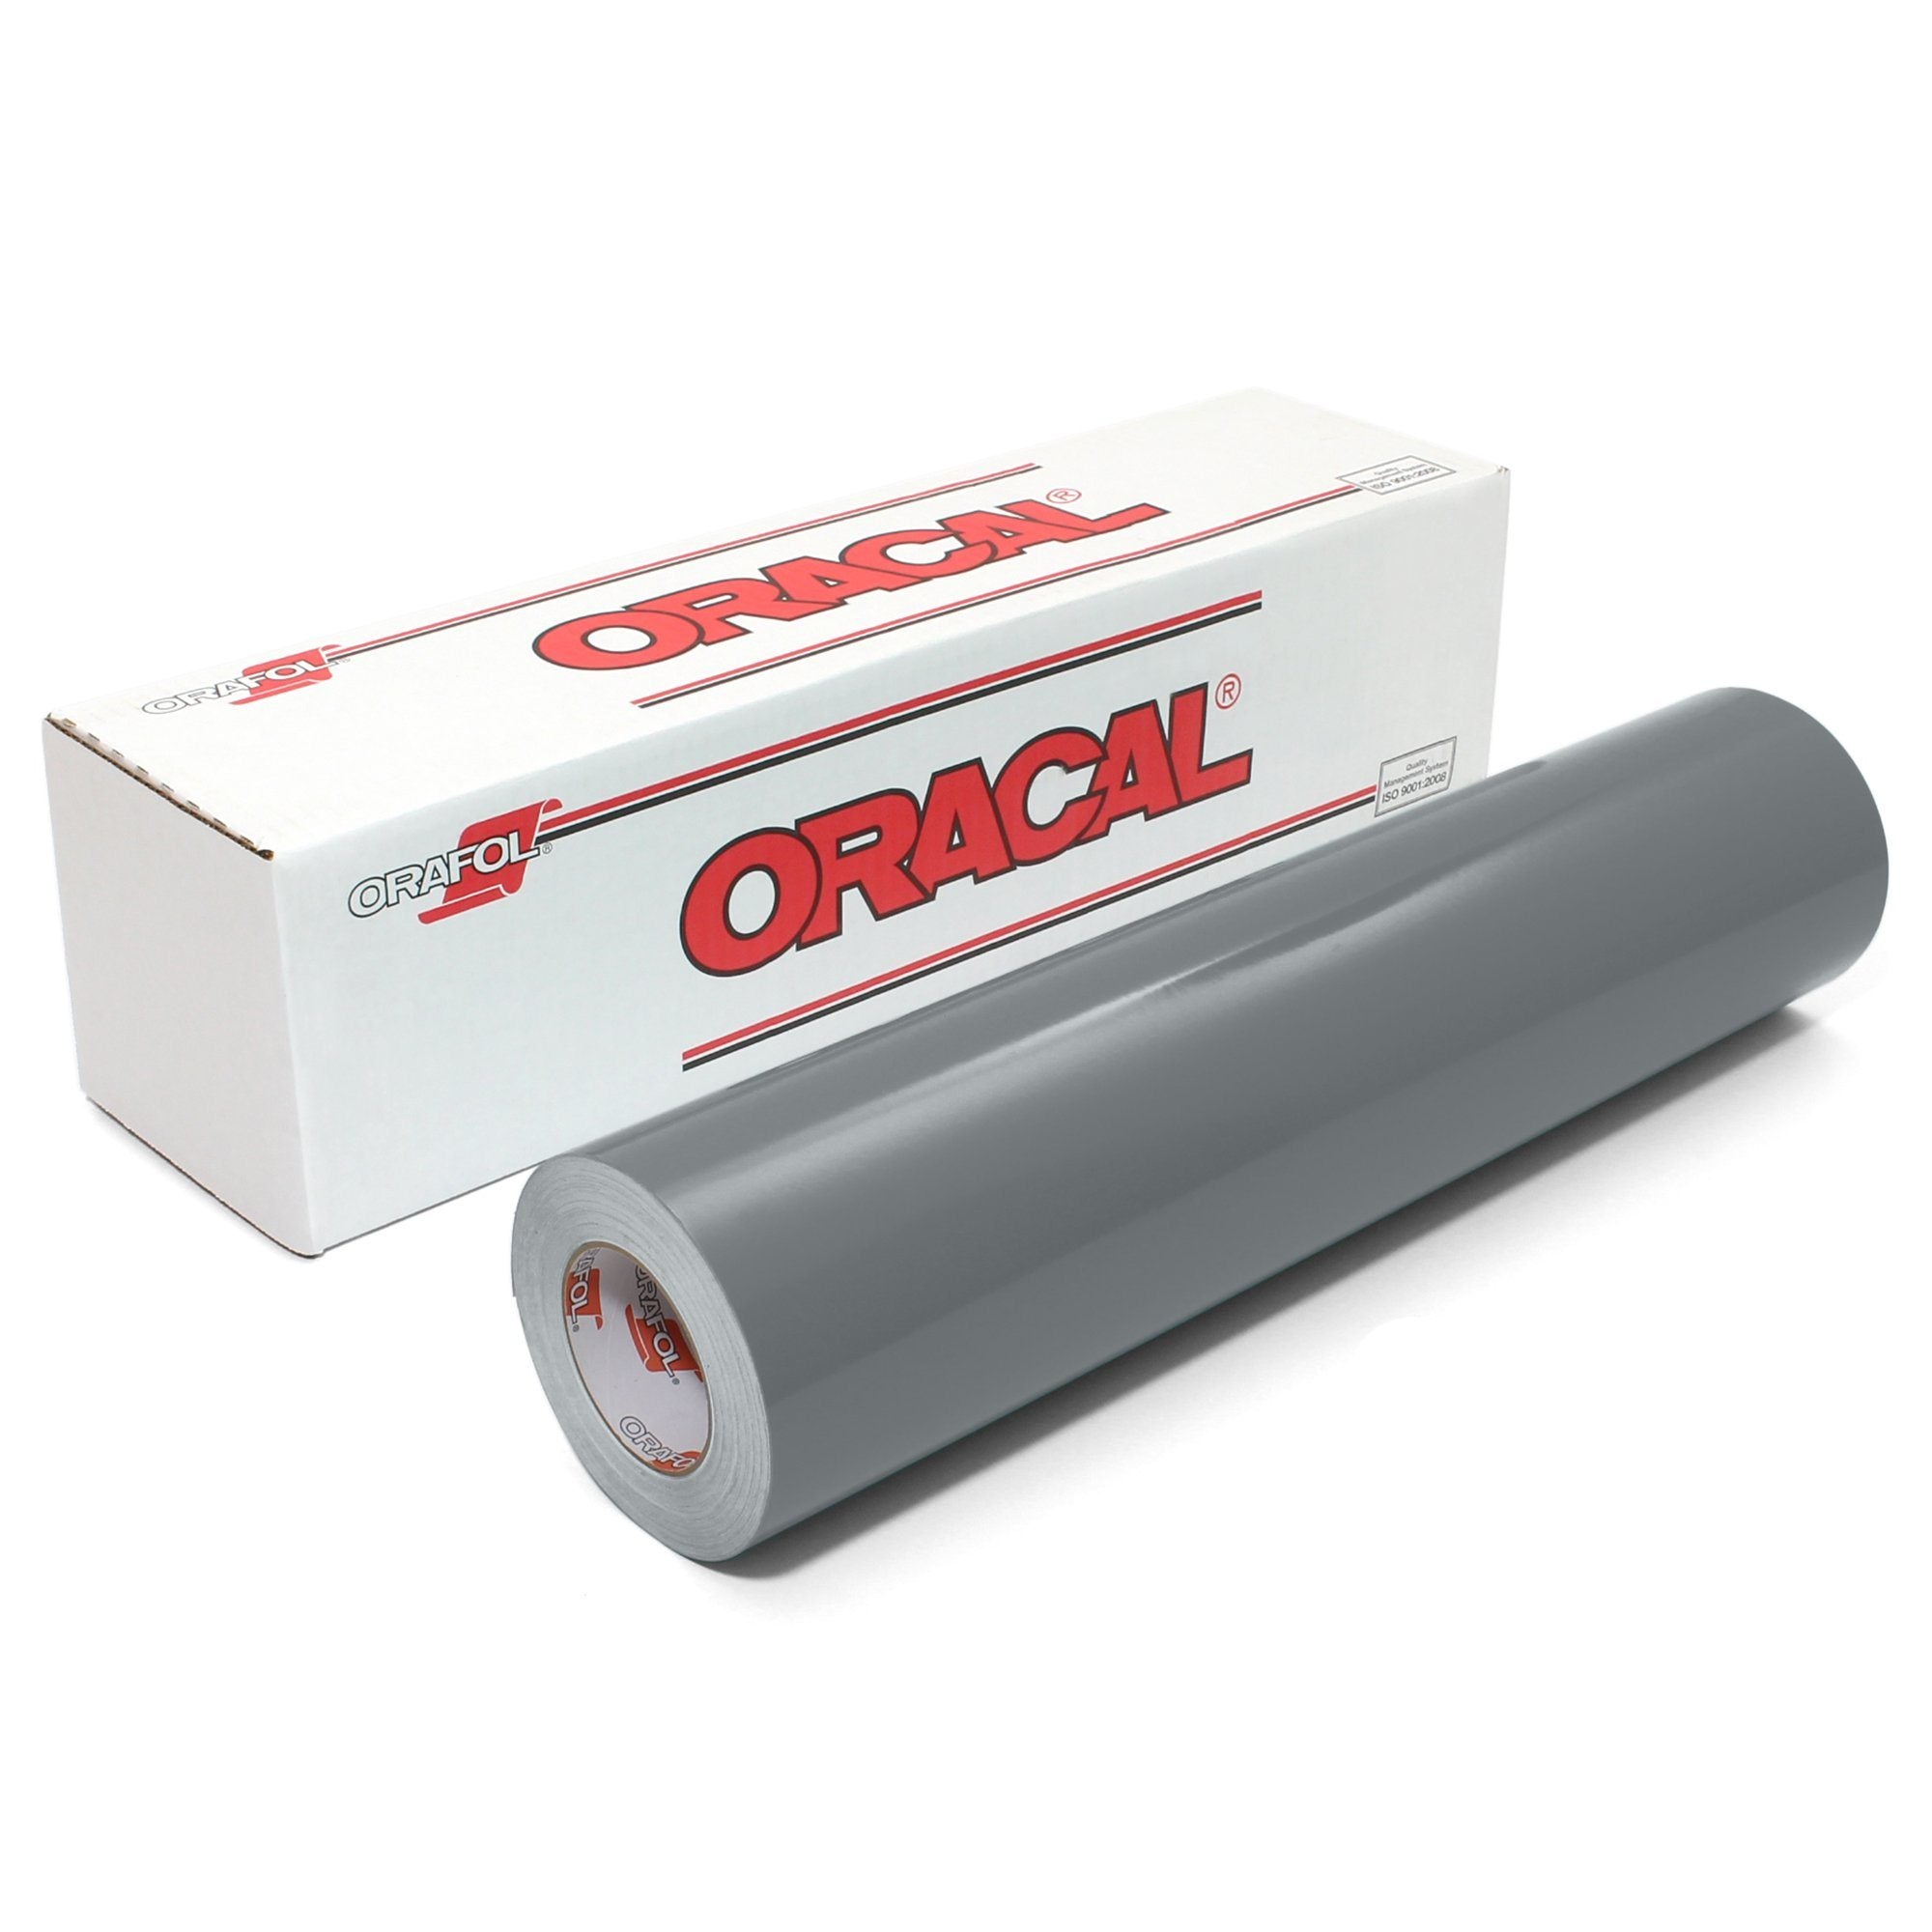 Oracal Transfer Tape 10' Roll  Craft Vinyl Supplies, Oracal 651